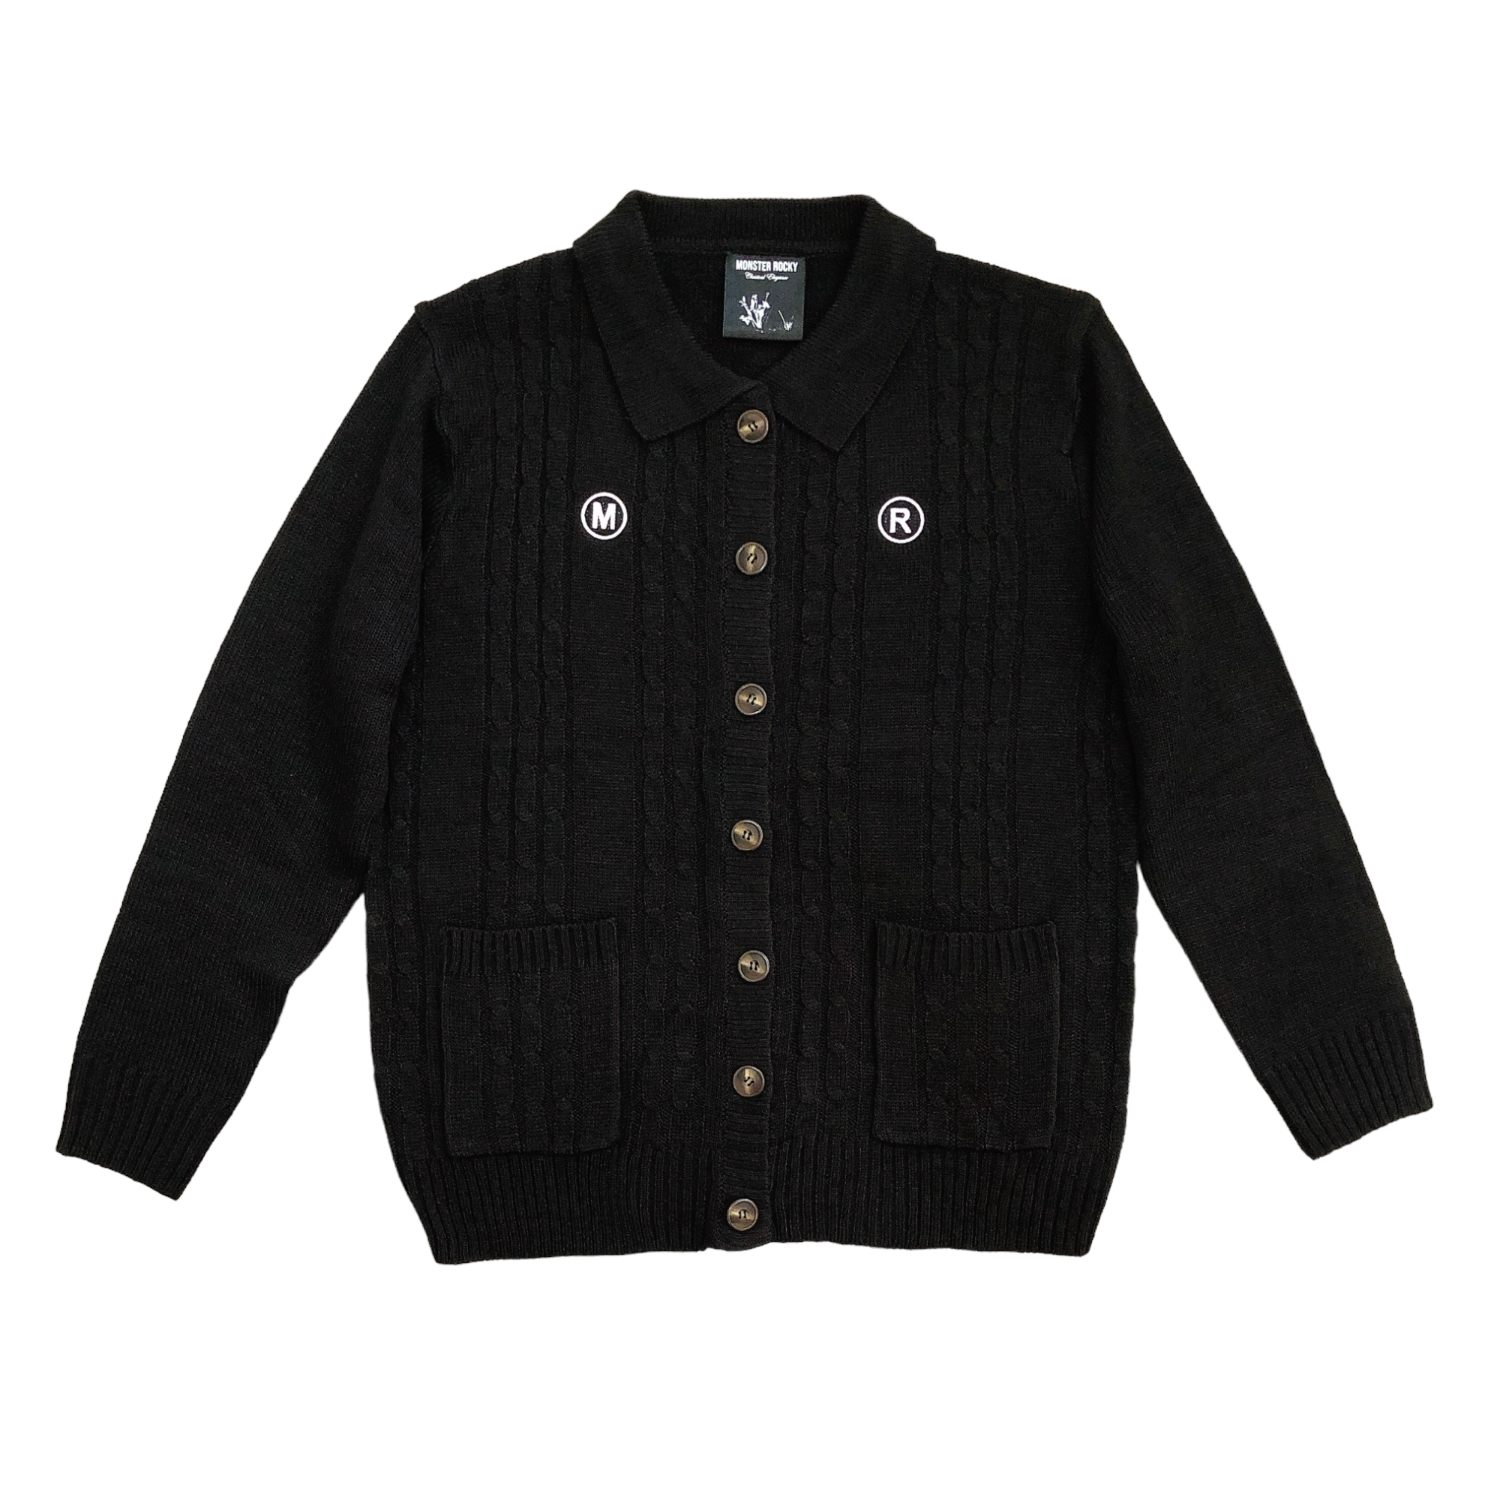 Daniel Buttoned Knit Jacket (Black)